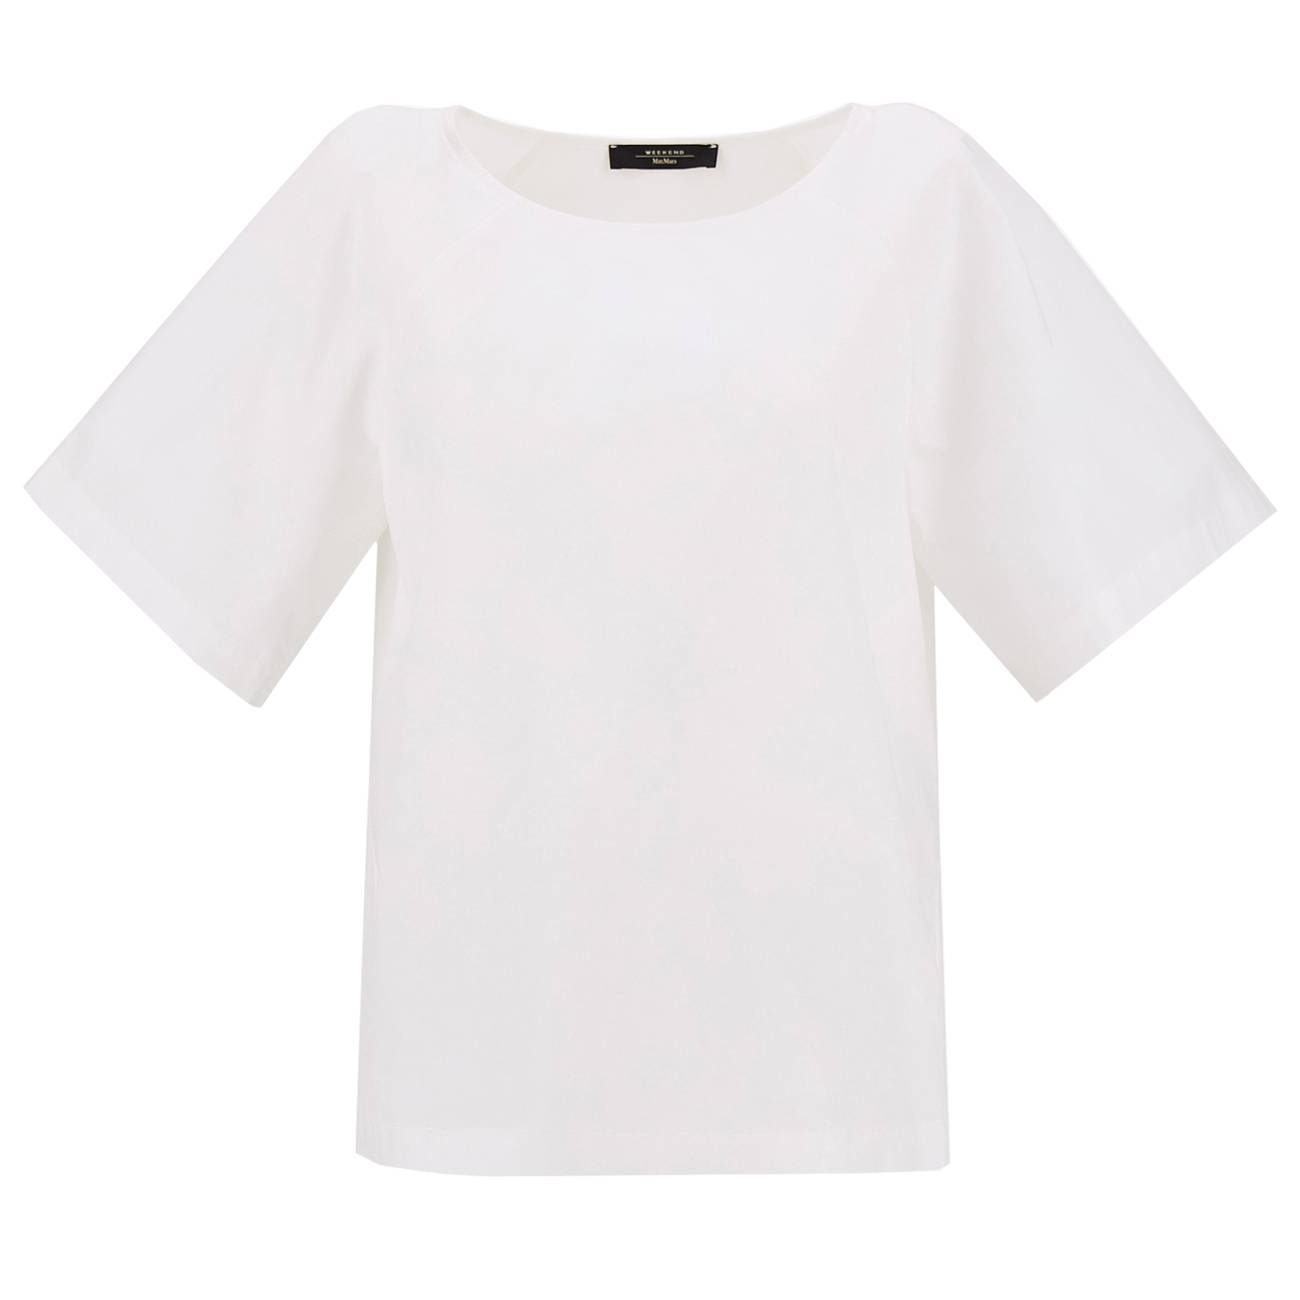 Cotton and jersey blouse L bestvalue.eu